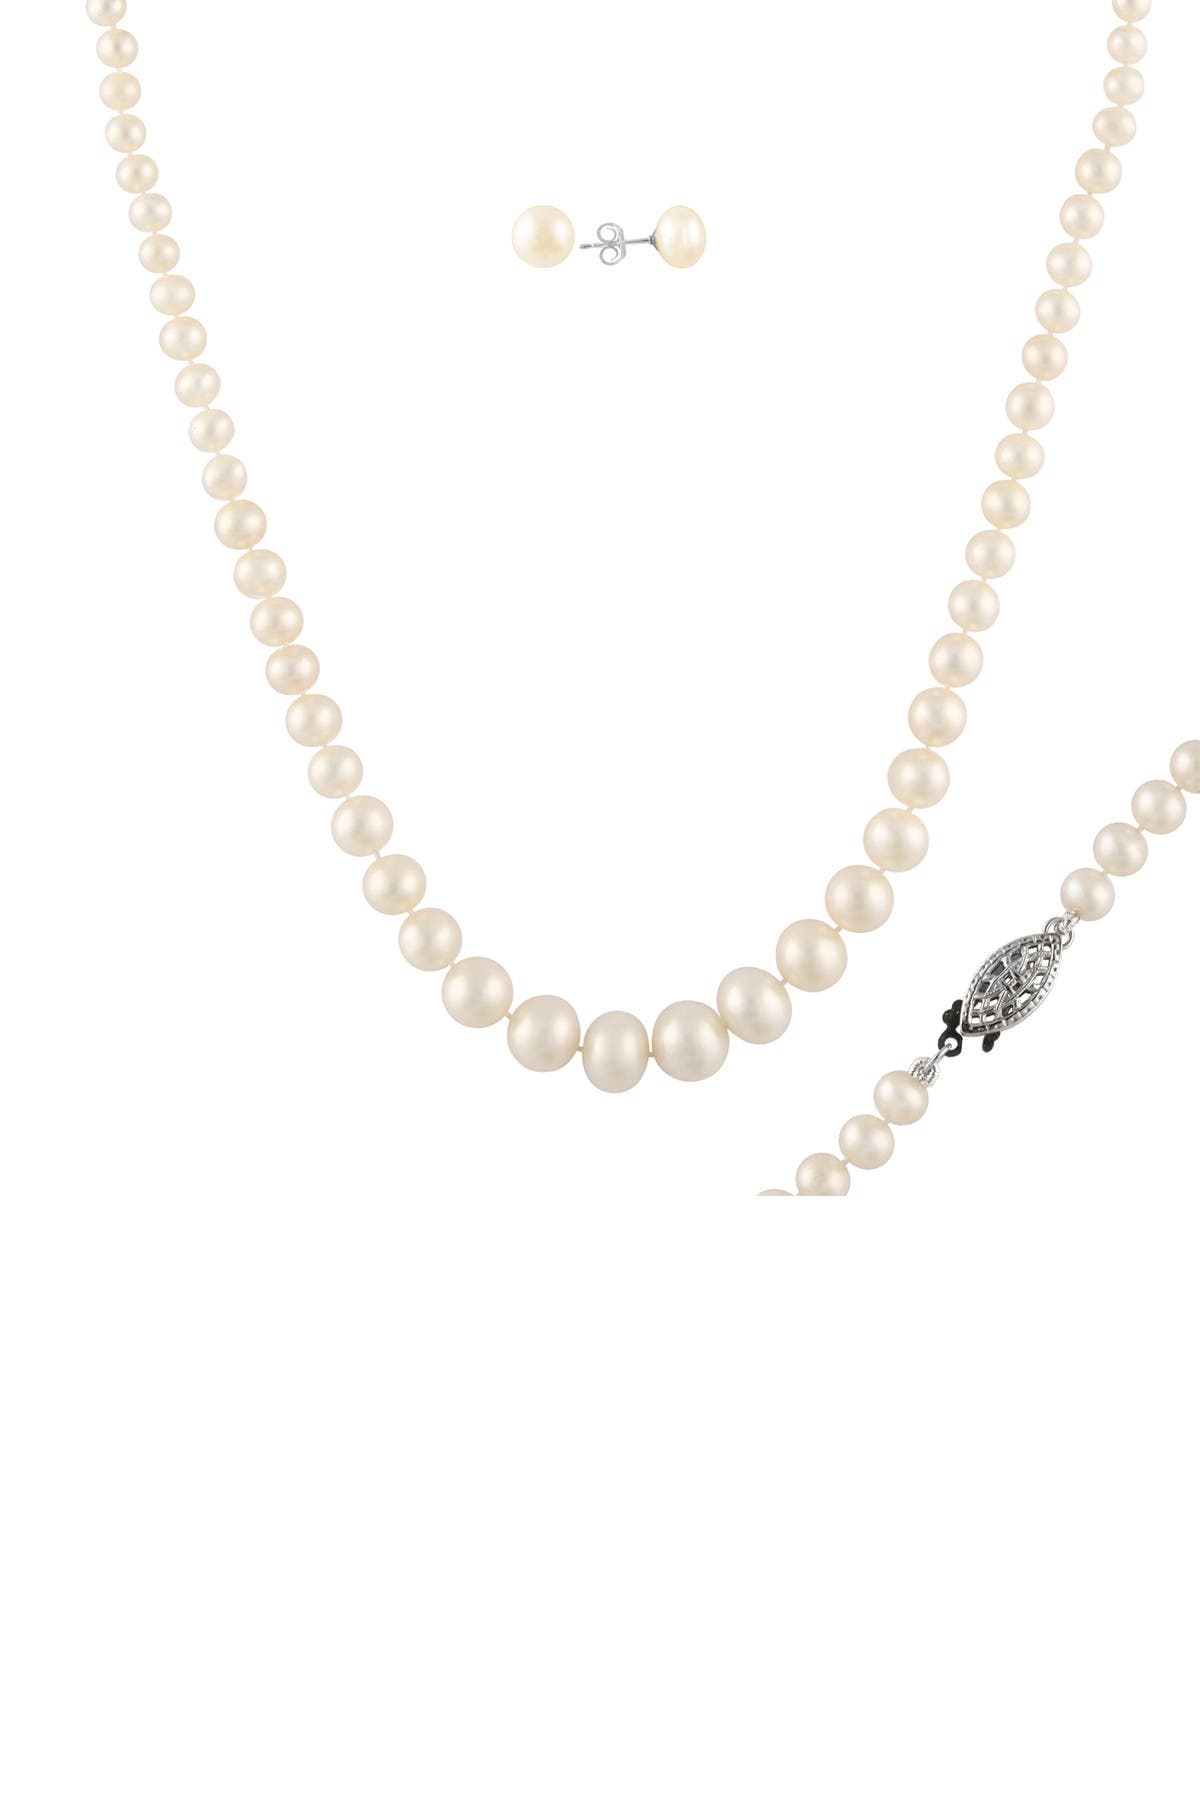 Splendid Pearls 11-12mm Freshwater Pear Necklace & Earrings Set In White